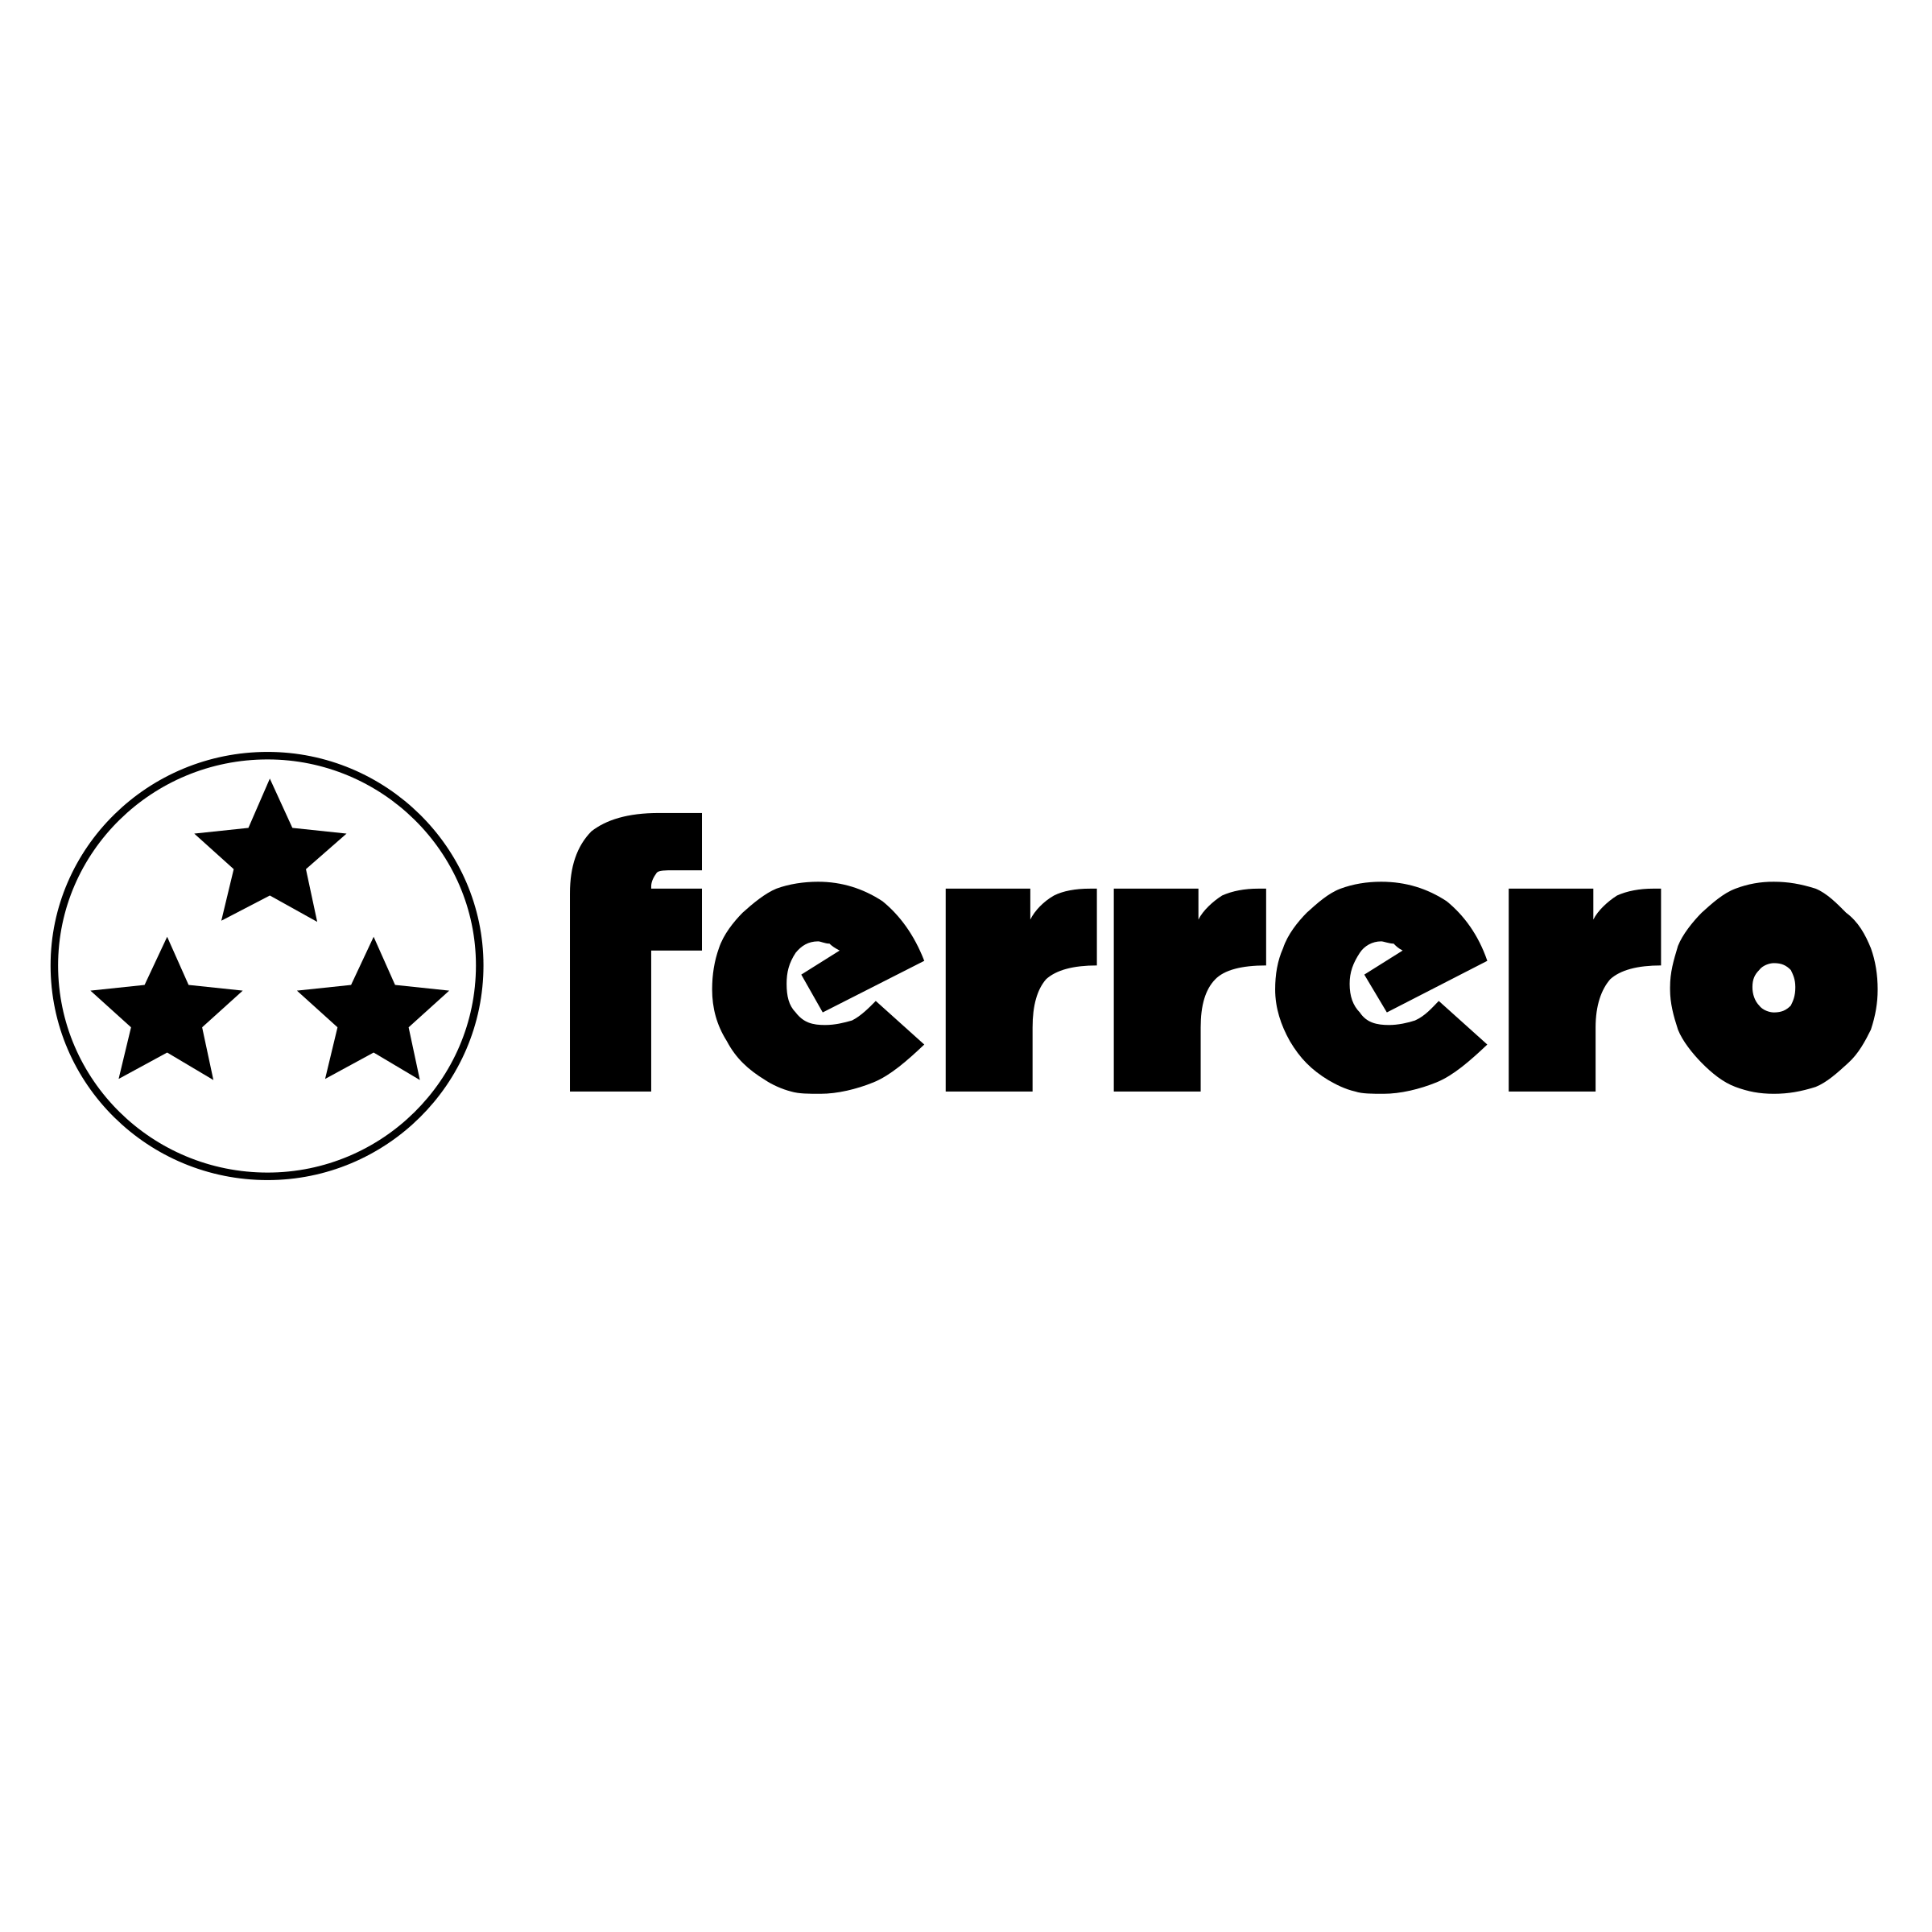 Ferrero Logo - Ferrero Logo PNG Transparent & SVG Vector - Freebie Supply